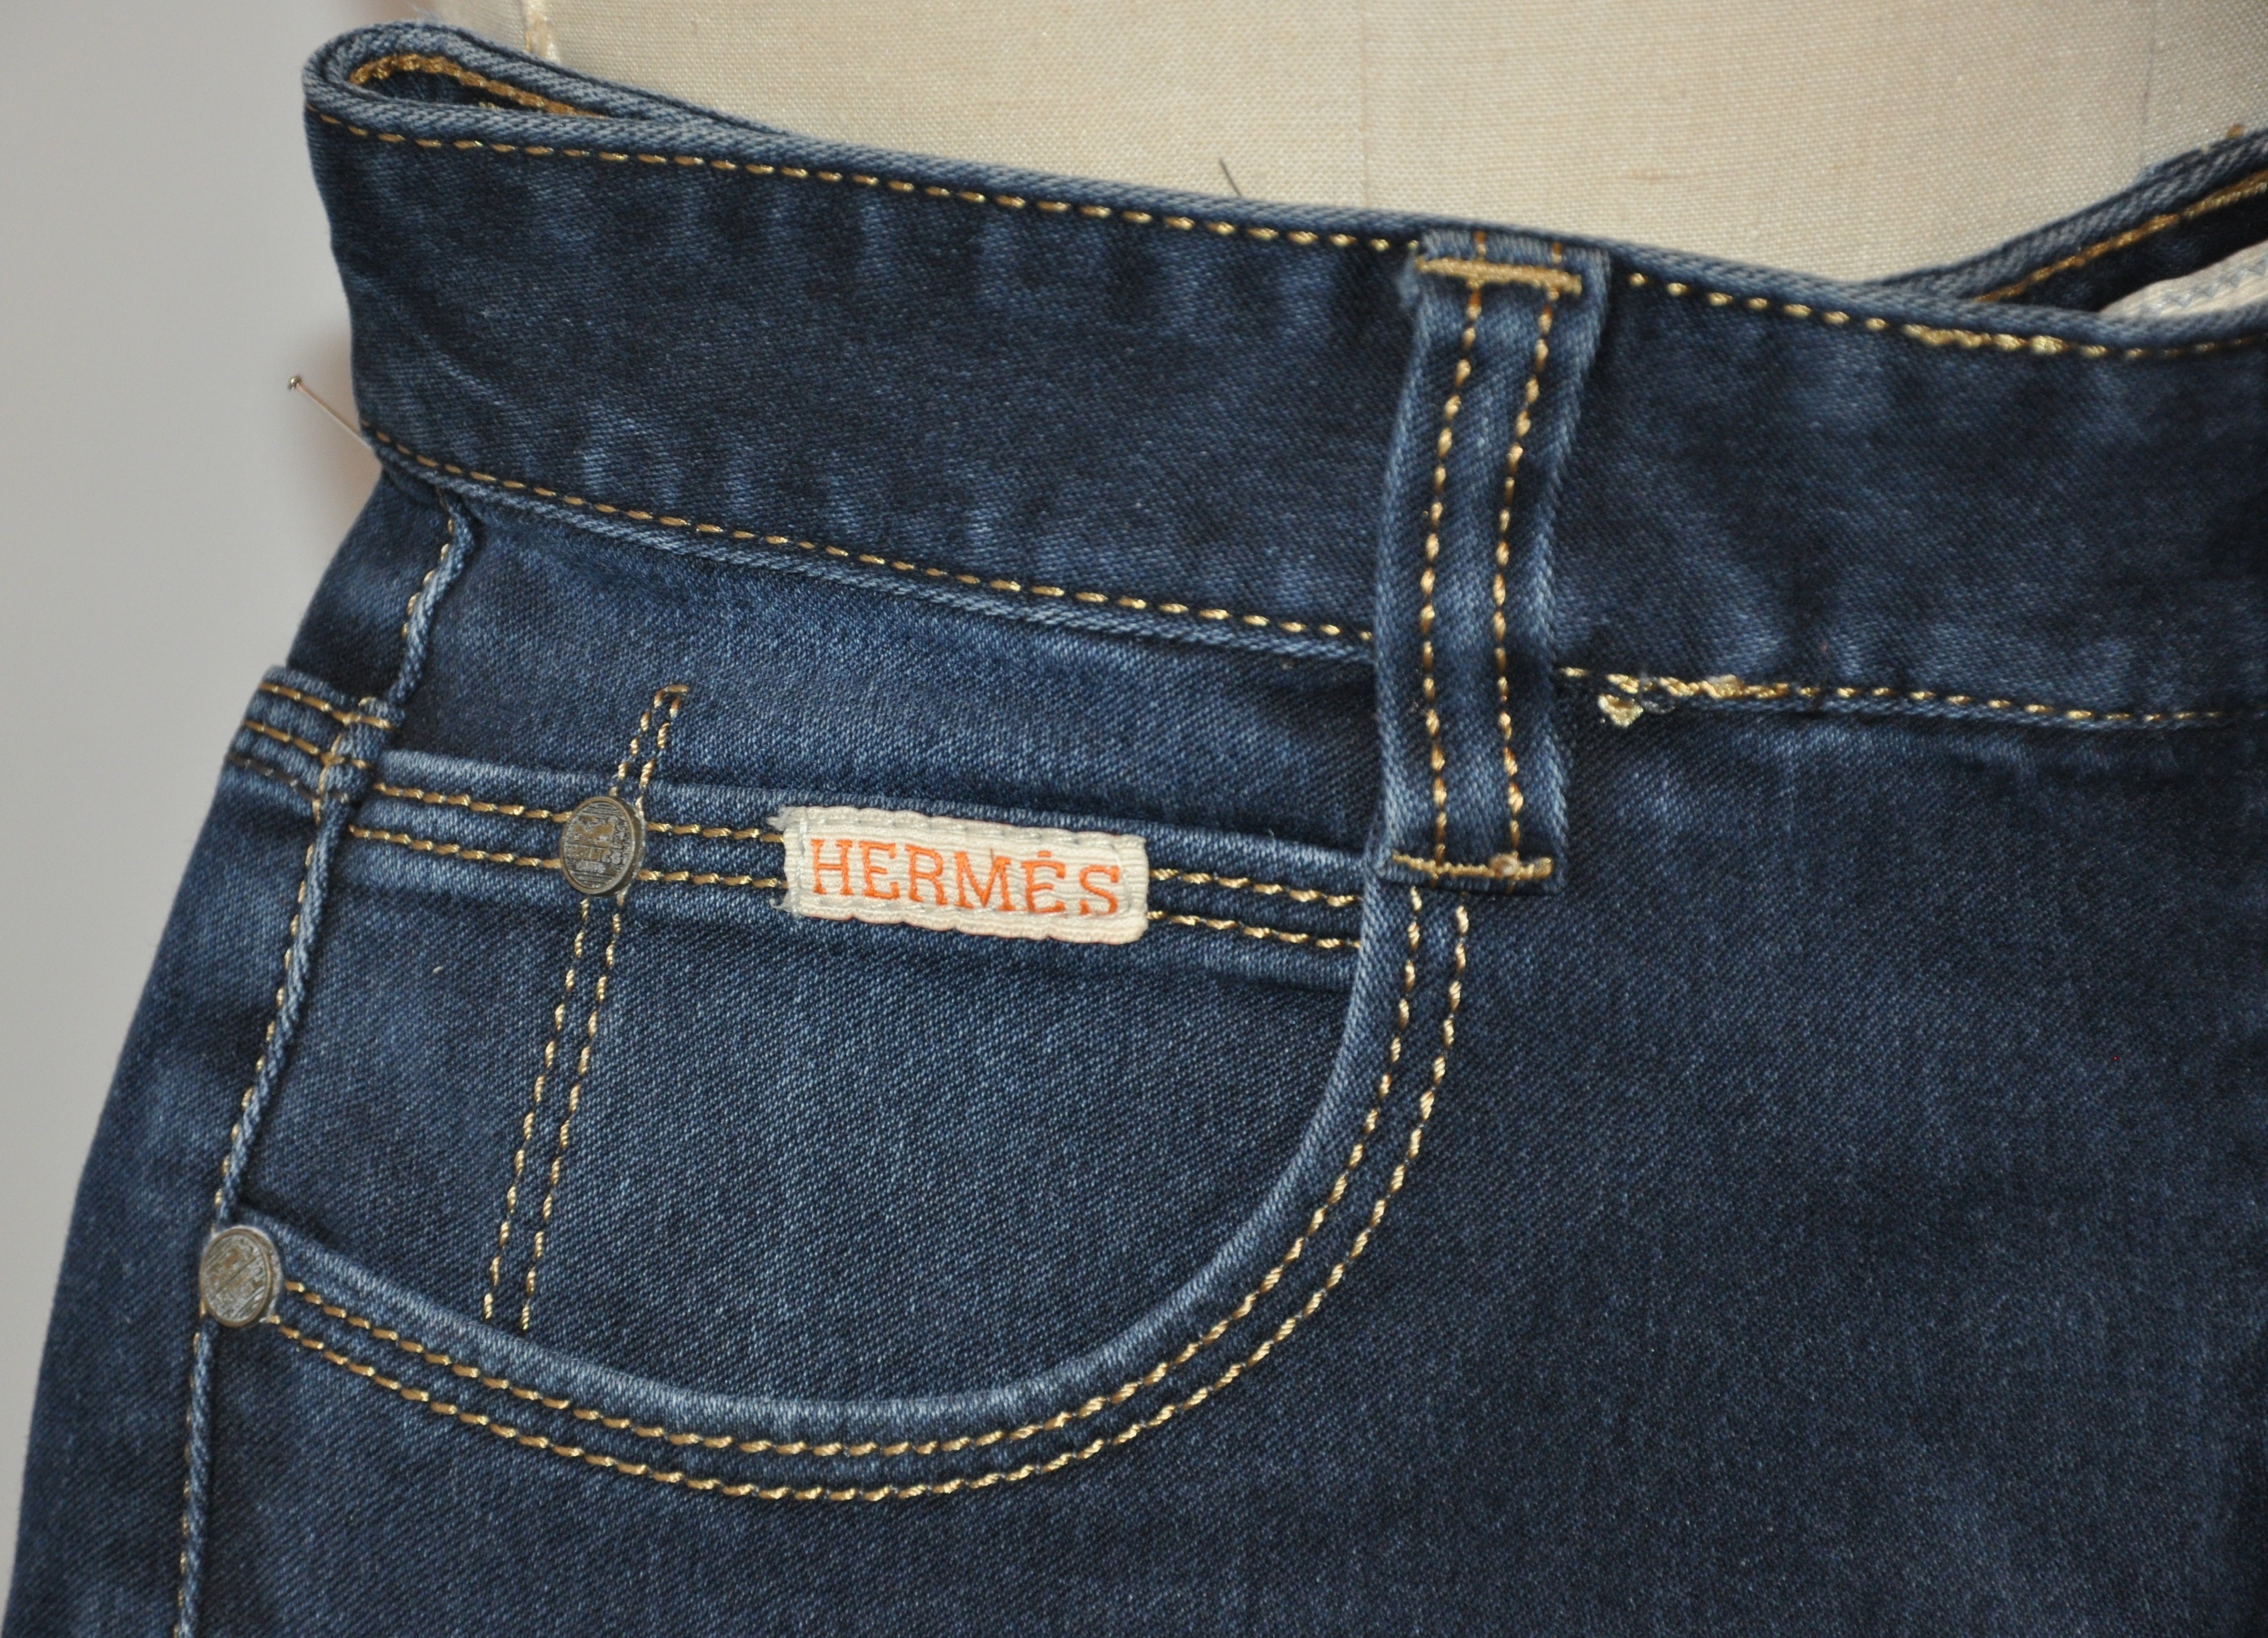 hermes mens jeans price